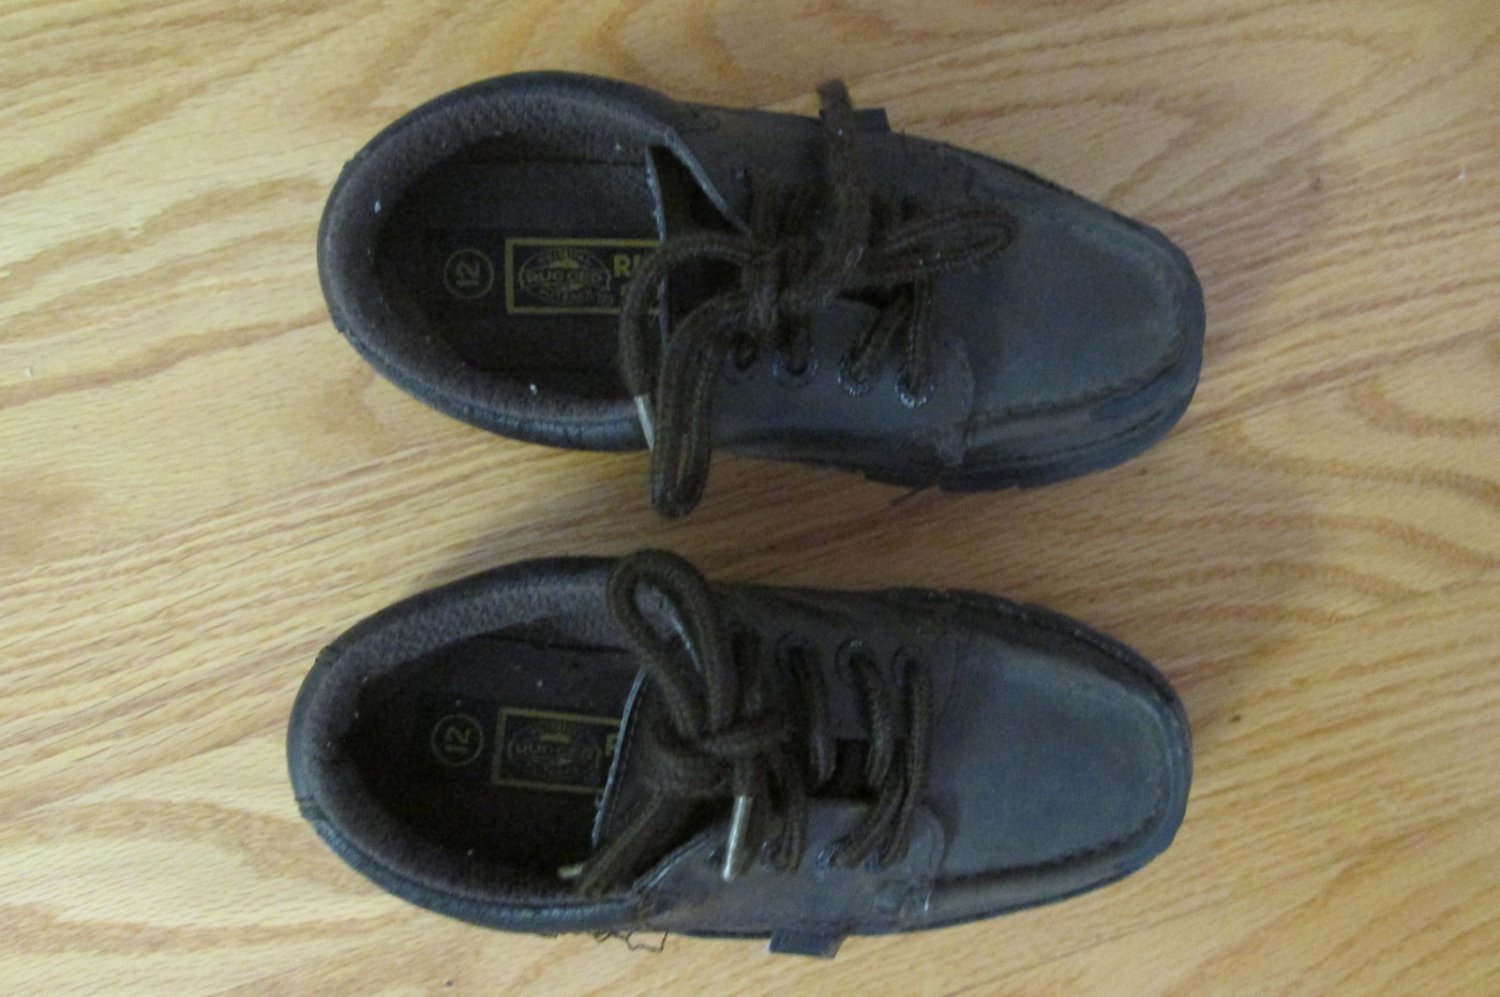 ecrater shoes